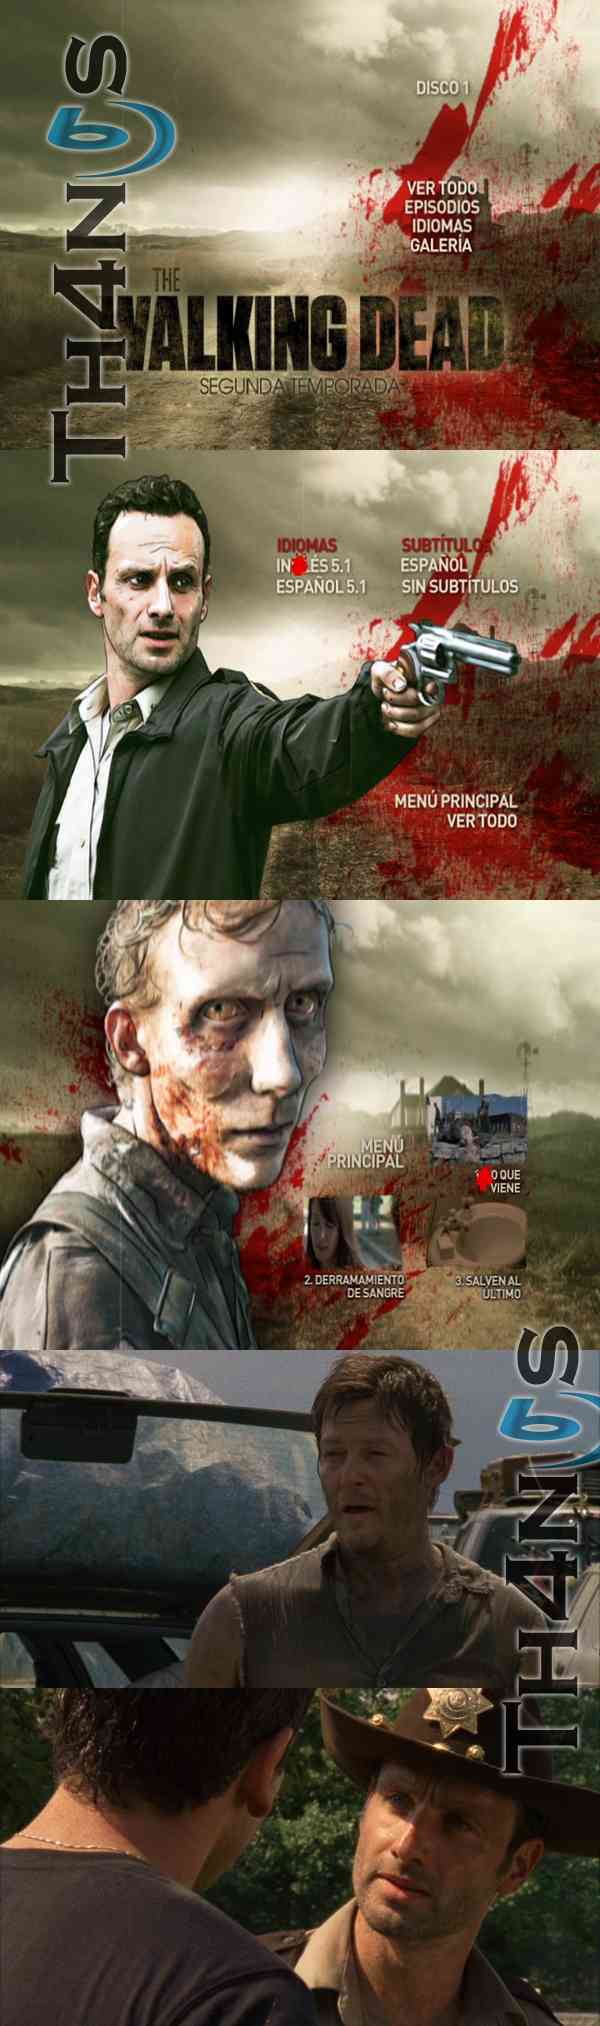 "The Walking Dead Segunda Temporada DVD"